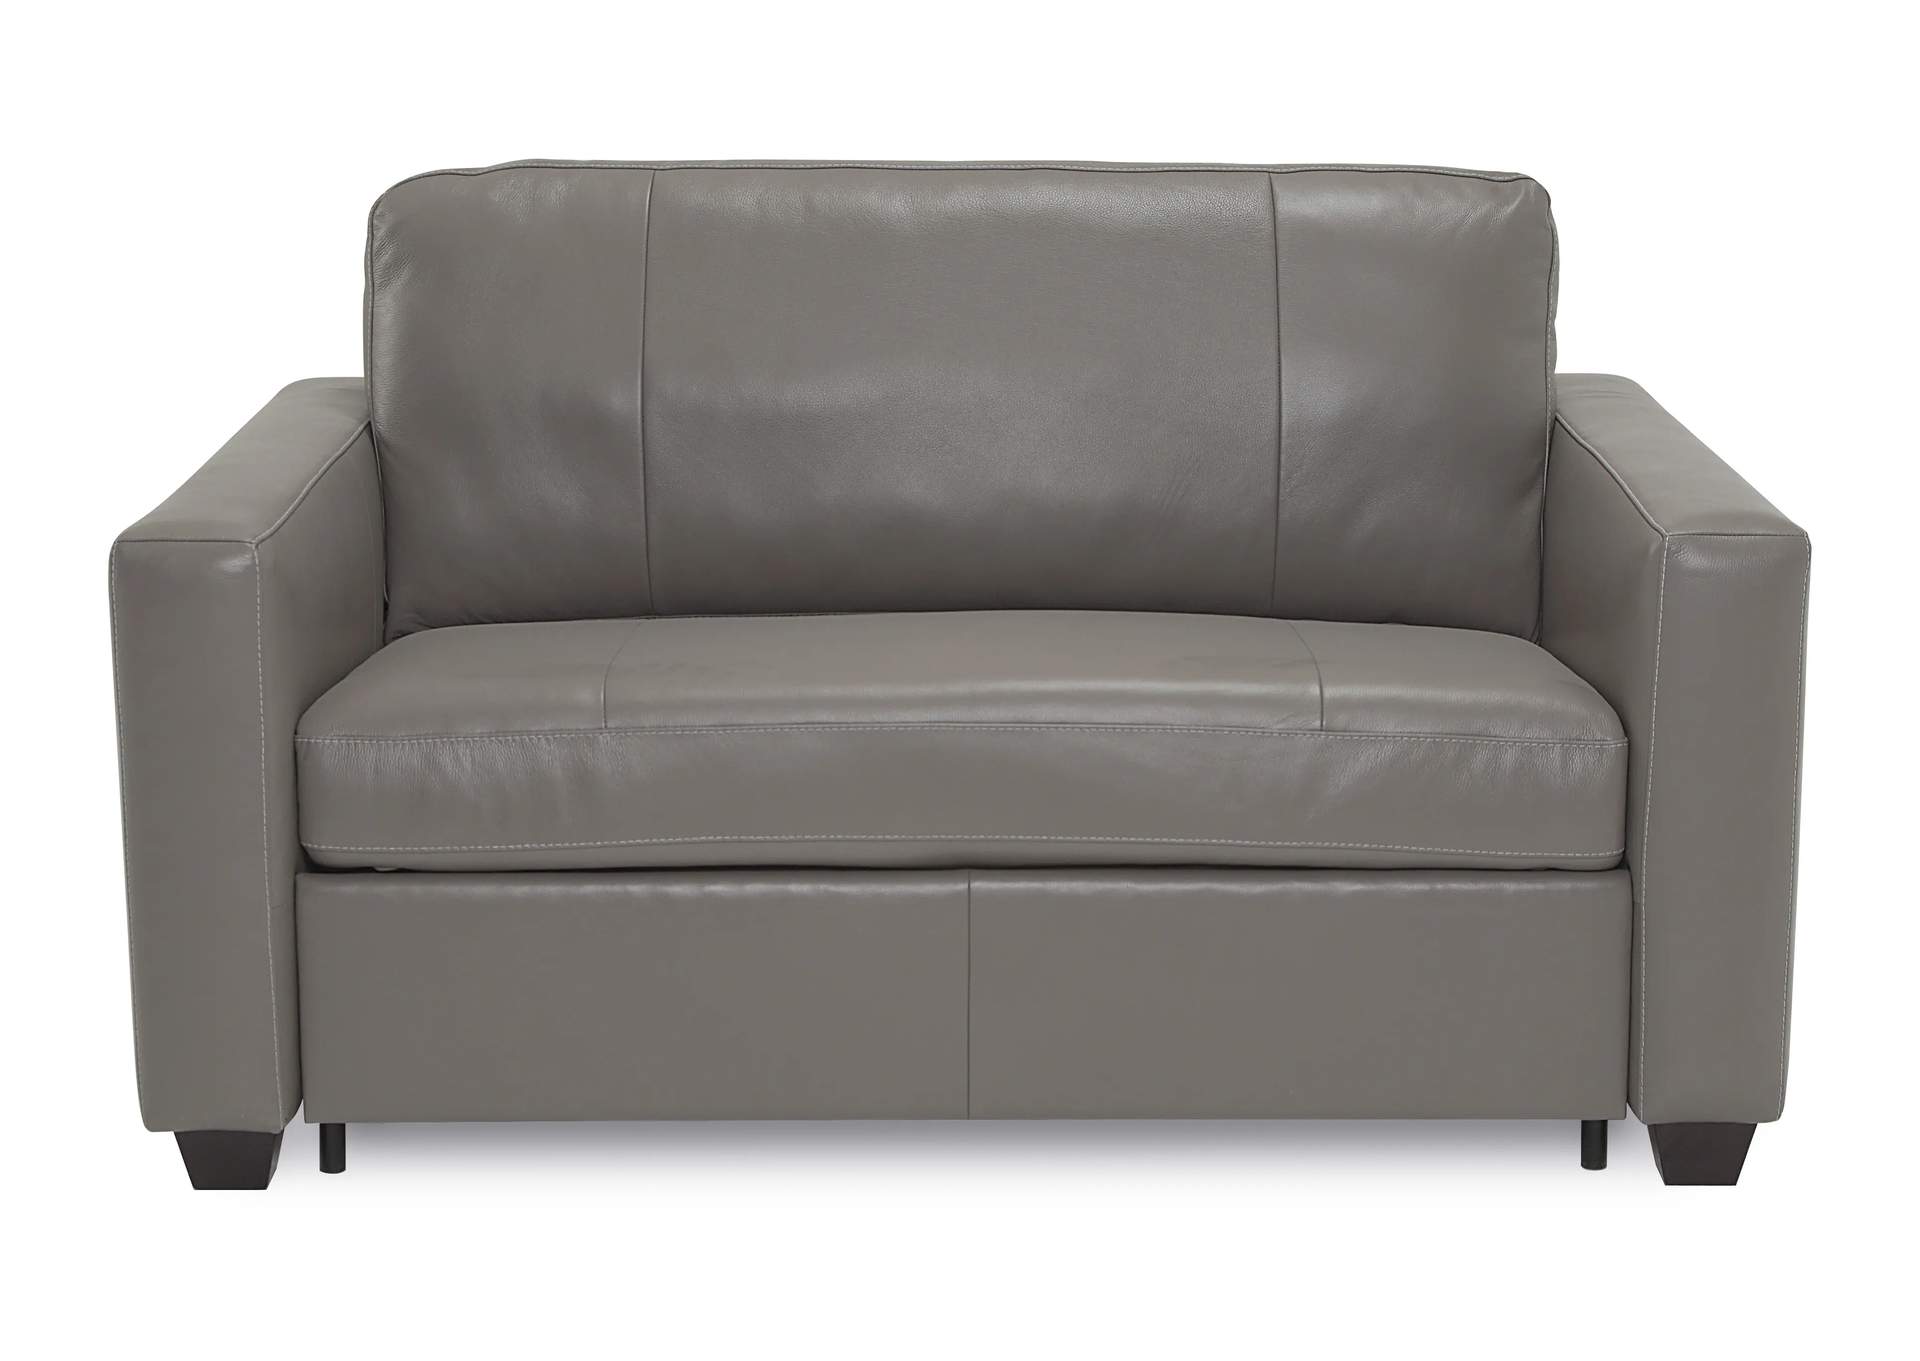 Kildonan Sofabed, Single, 1 Cushion,Palliser Furniture